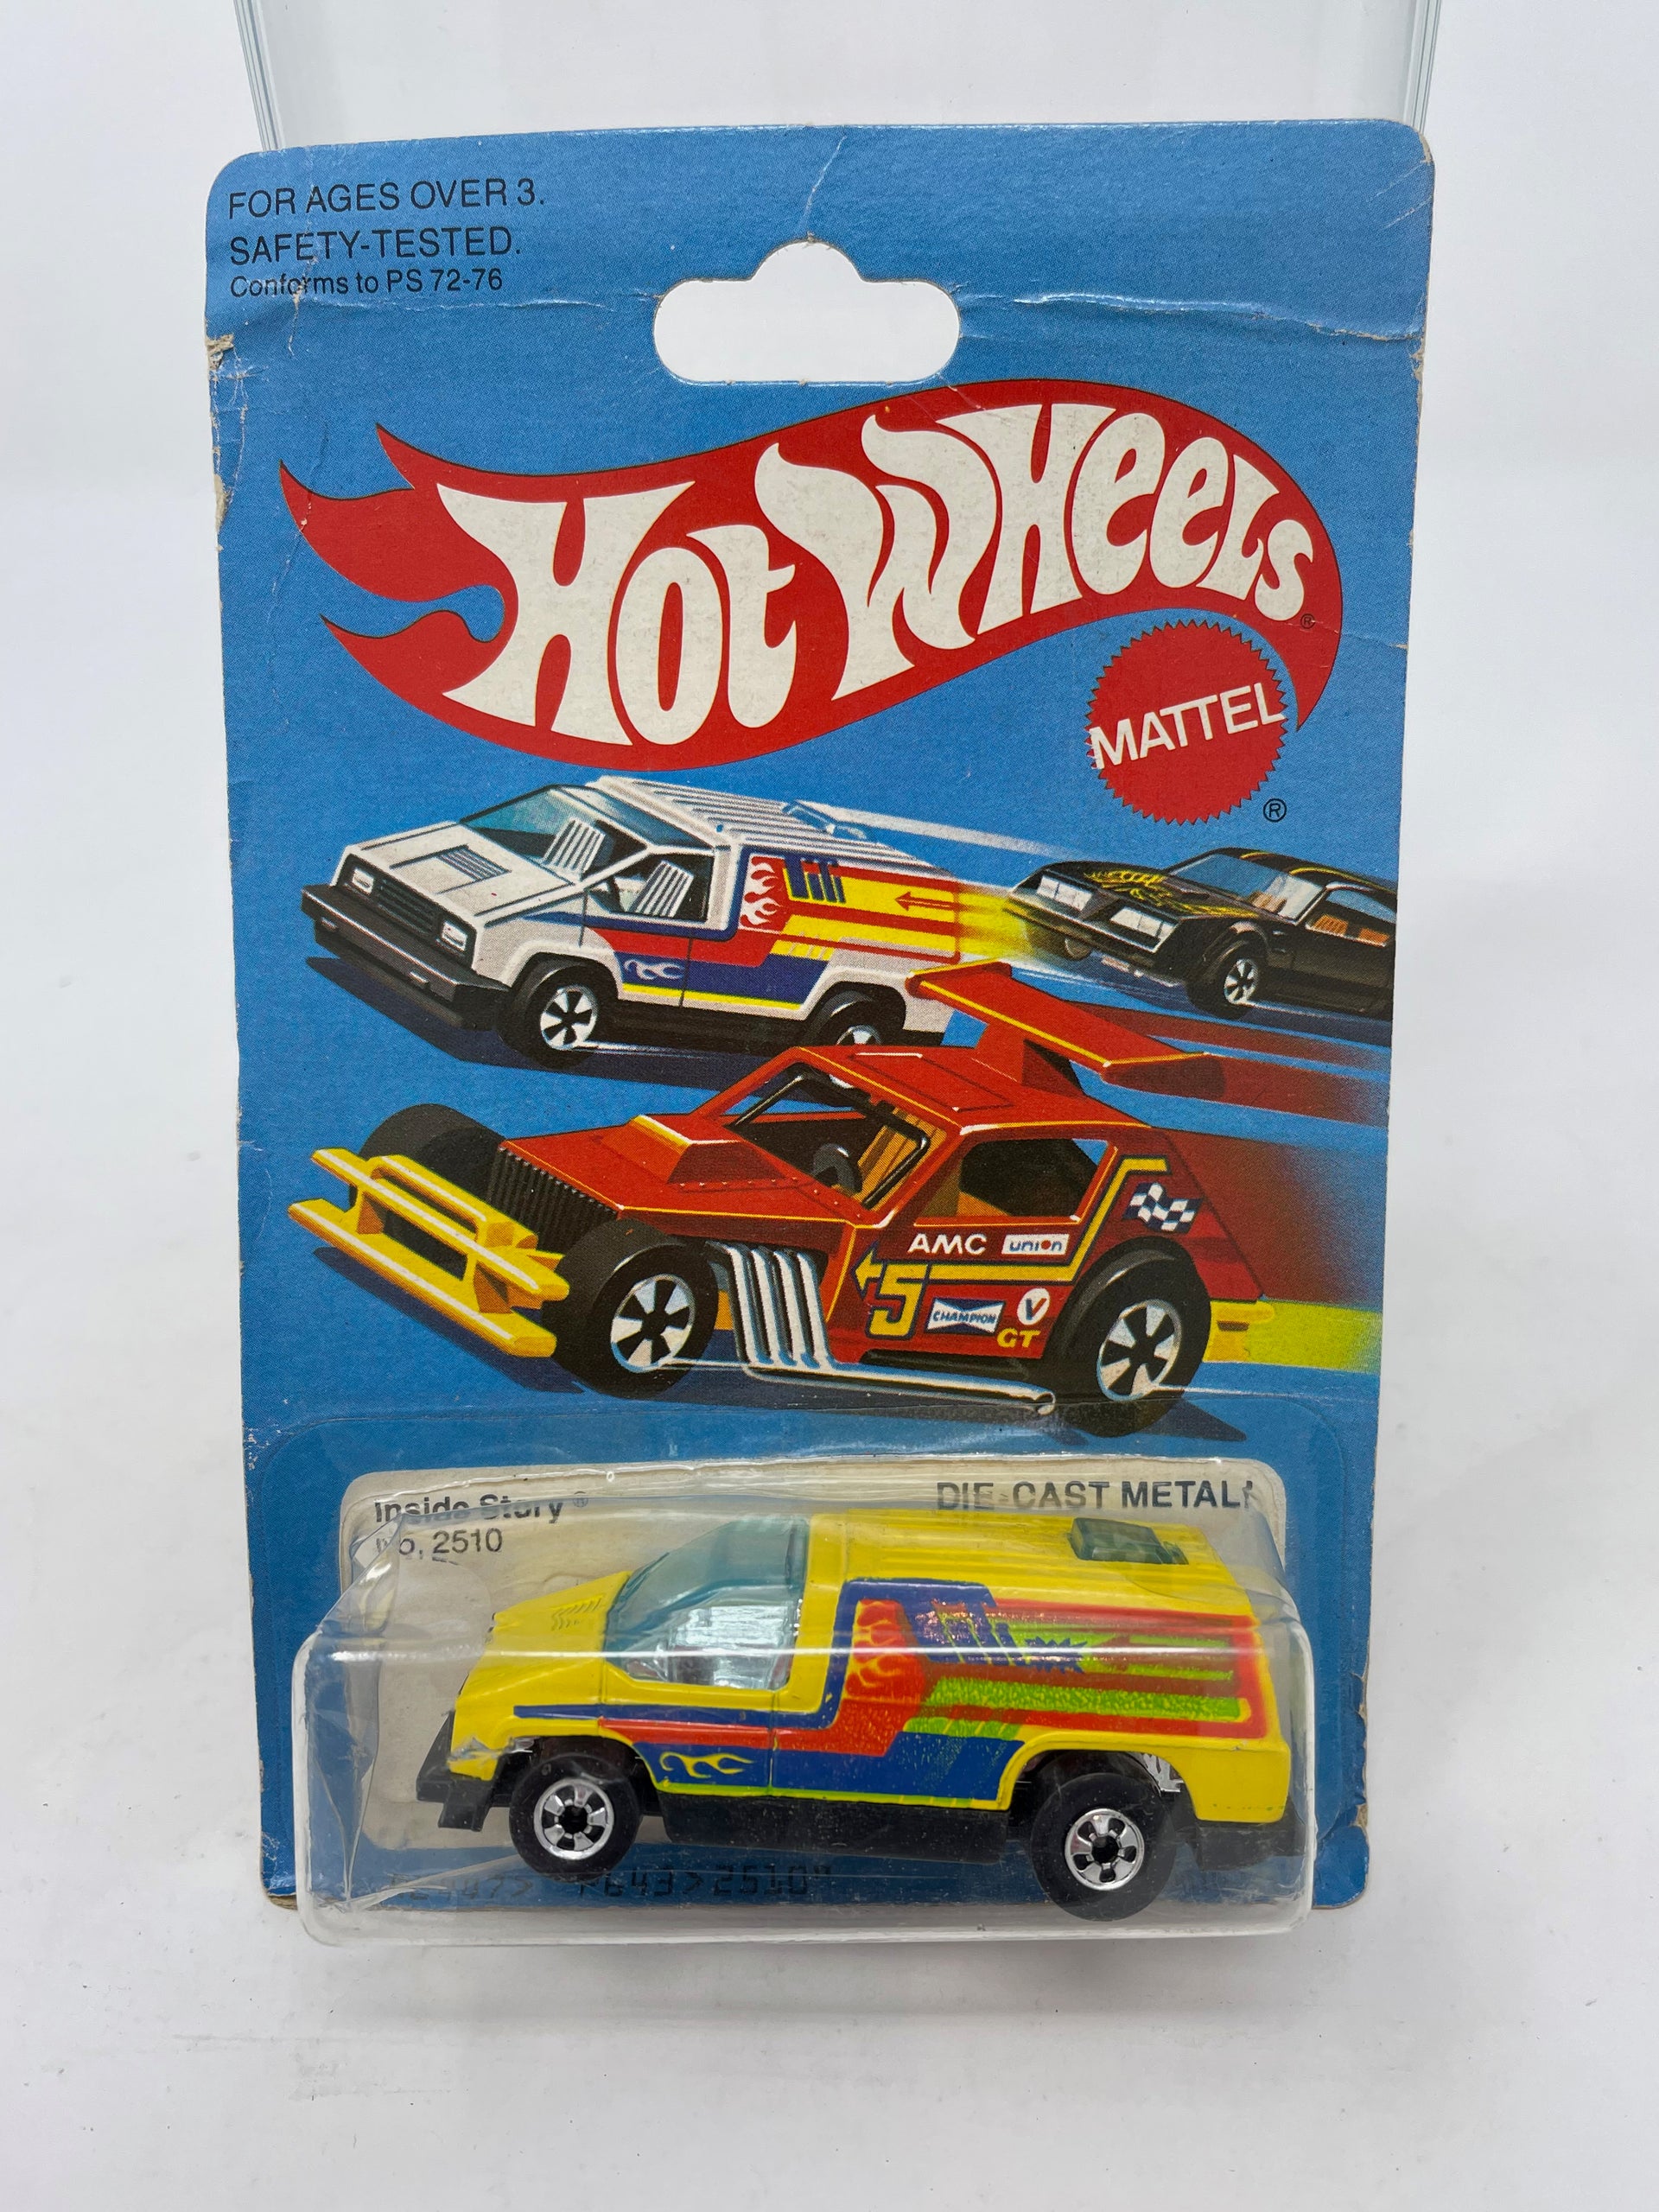 Hot Wheels Crack-Ups 1980s Mattel Vintage Toy Review 